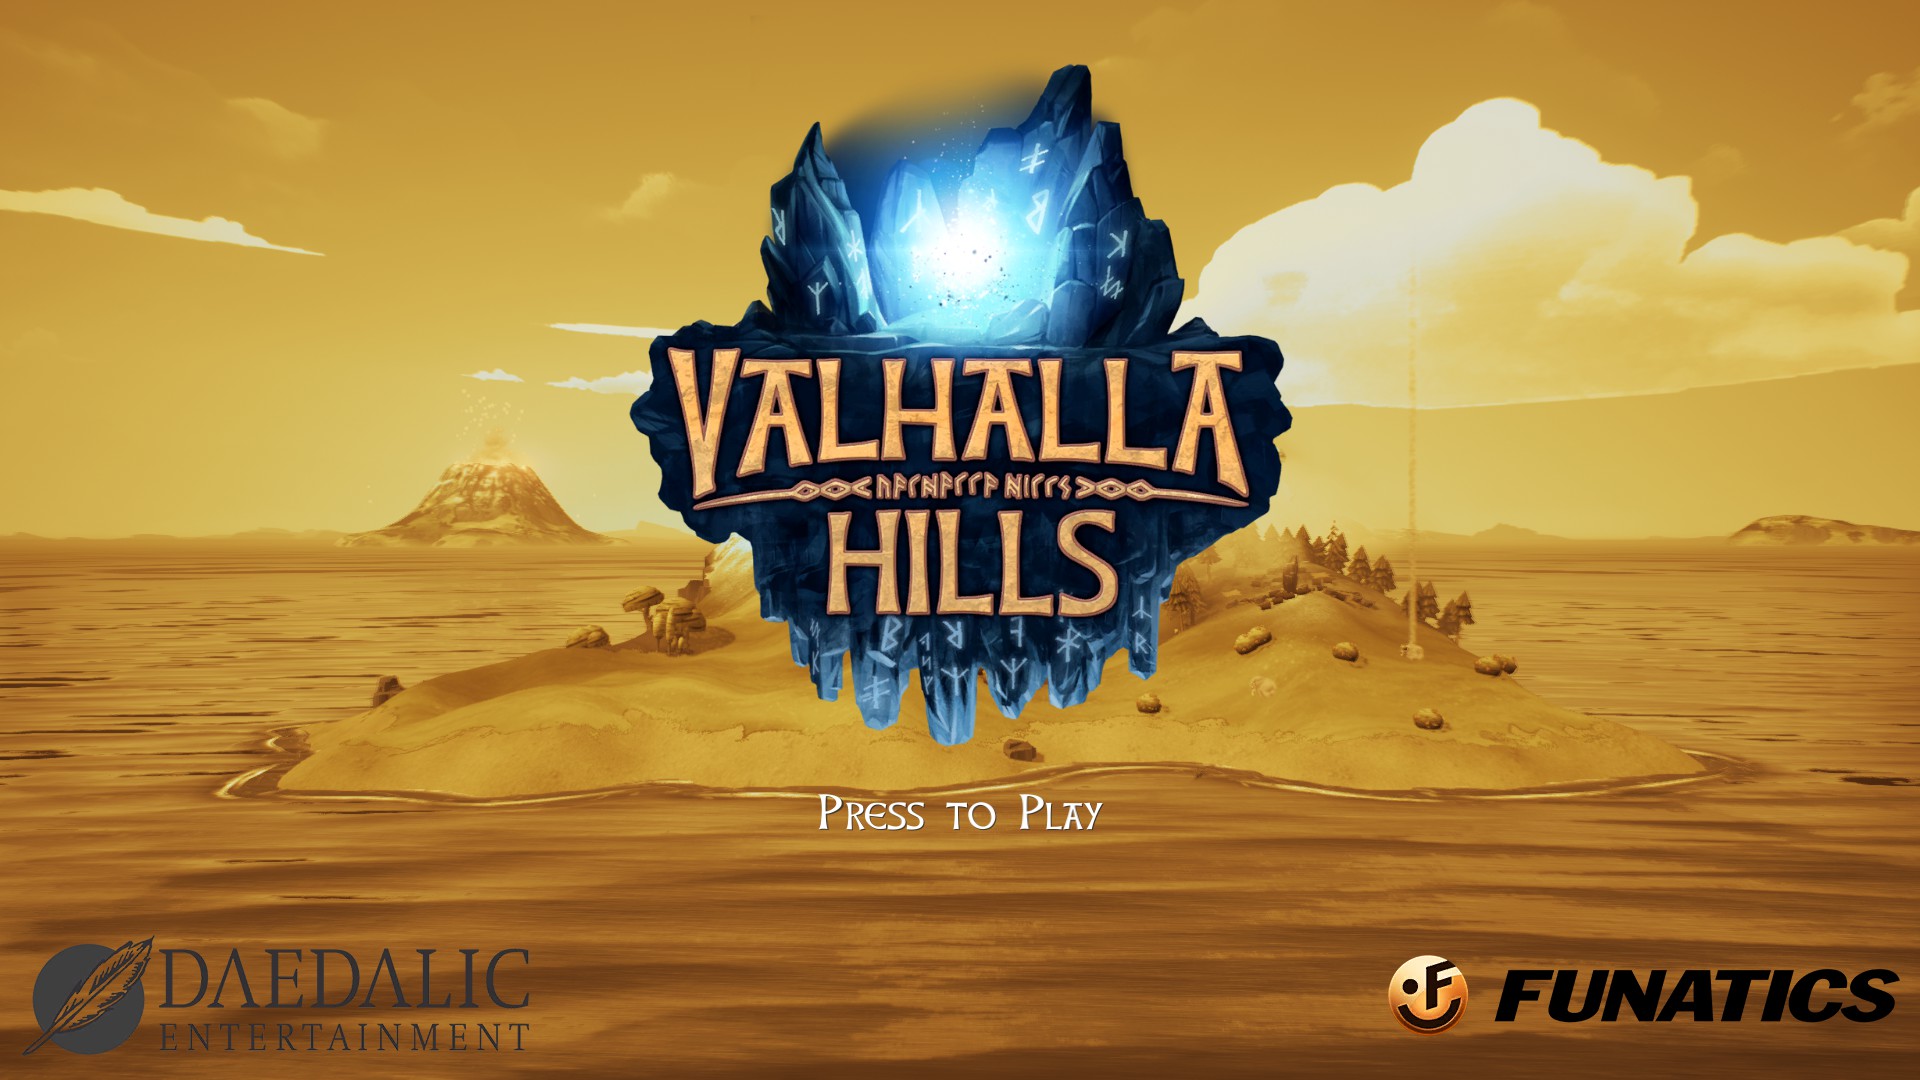 Valhalla essence. Valhalla Hills ps4. Valhalla стратегия. Вальхалла играть. Читы Вальгалла.